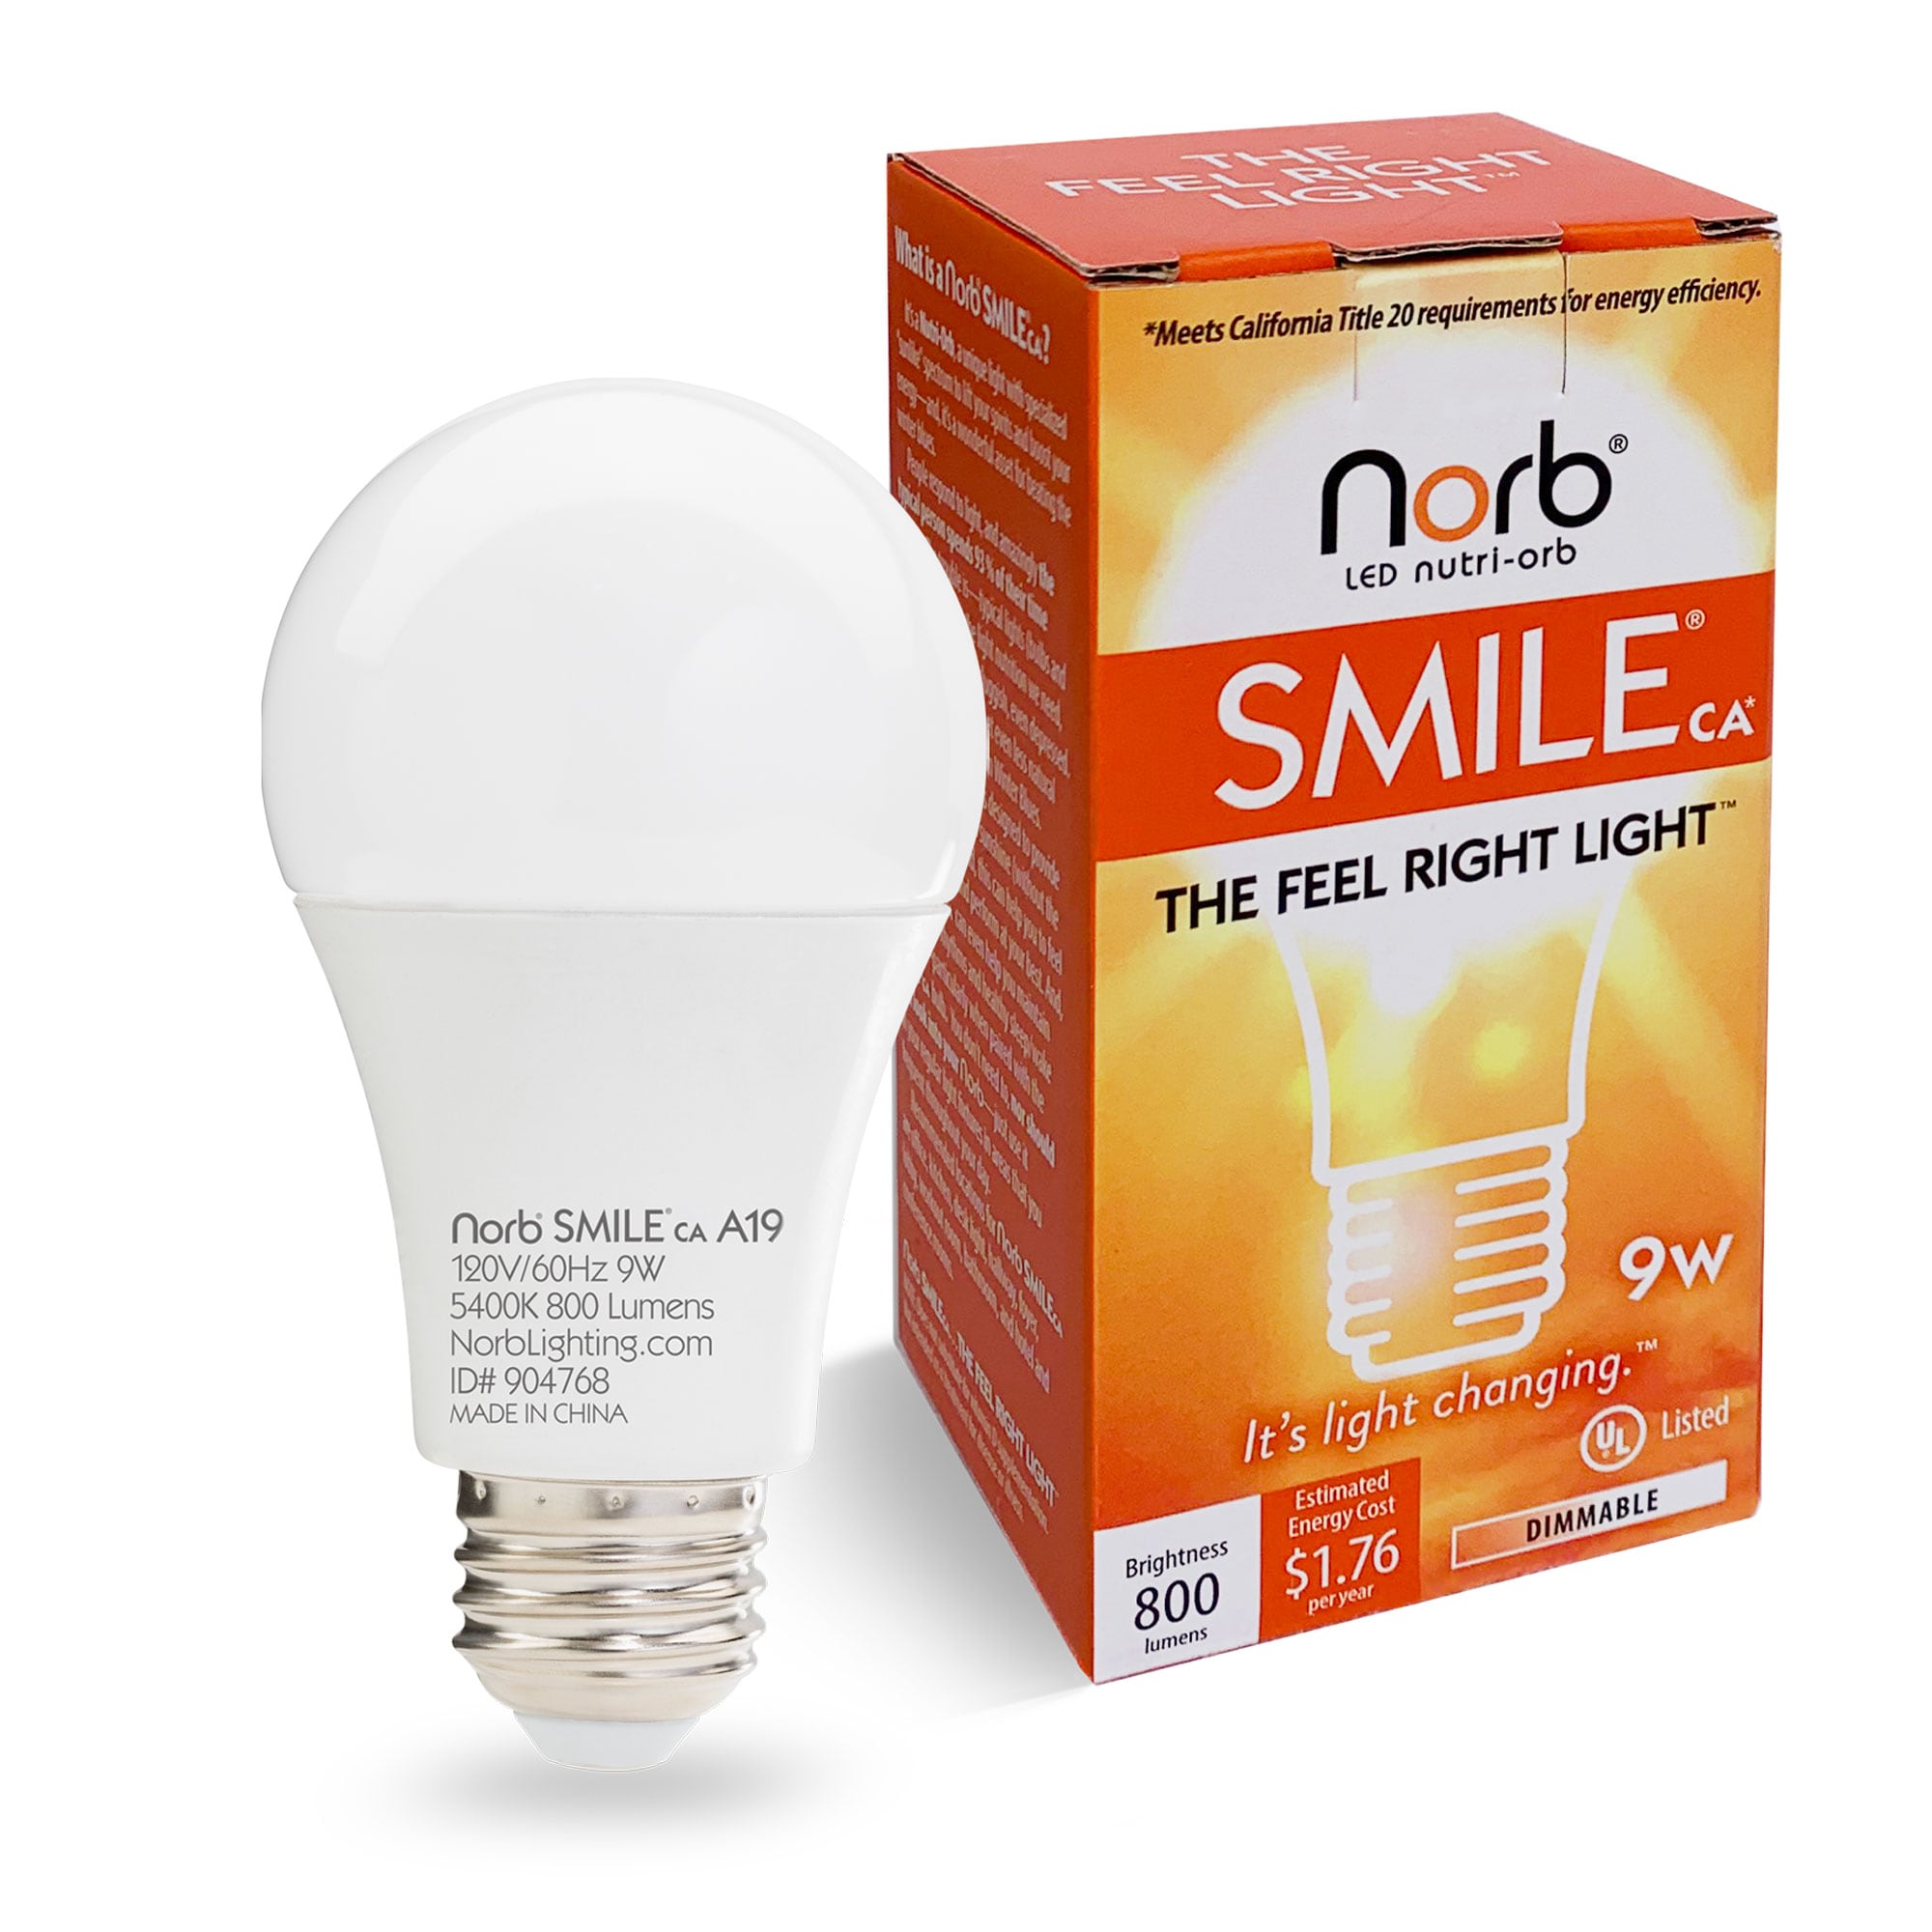 Norb 60-Watt EQ Full Spectrum Medium Base (e-26) Dimmable LED Light Bulb in General Purpose LED Light Bulbs department at Lowes.com